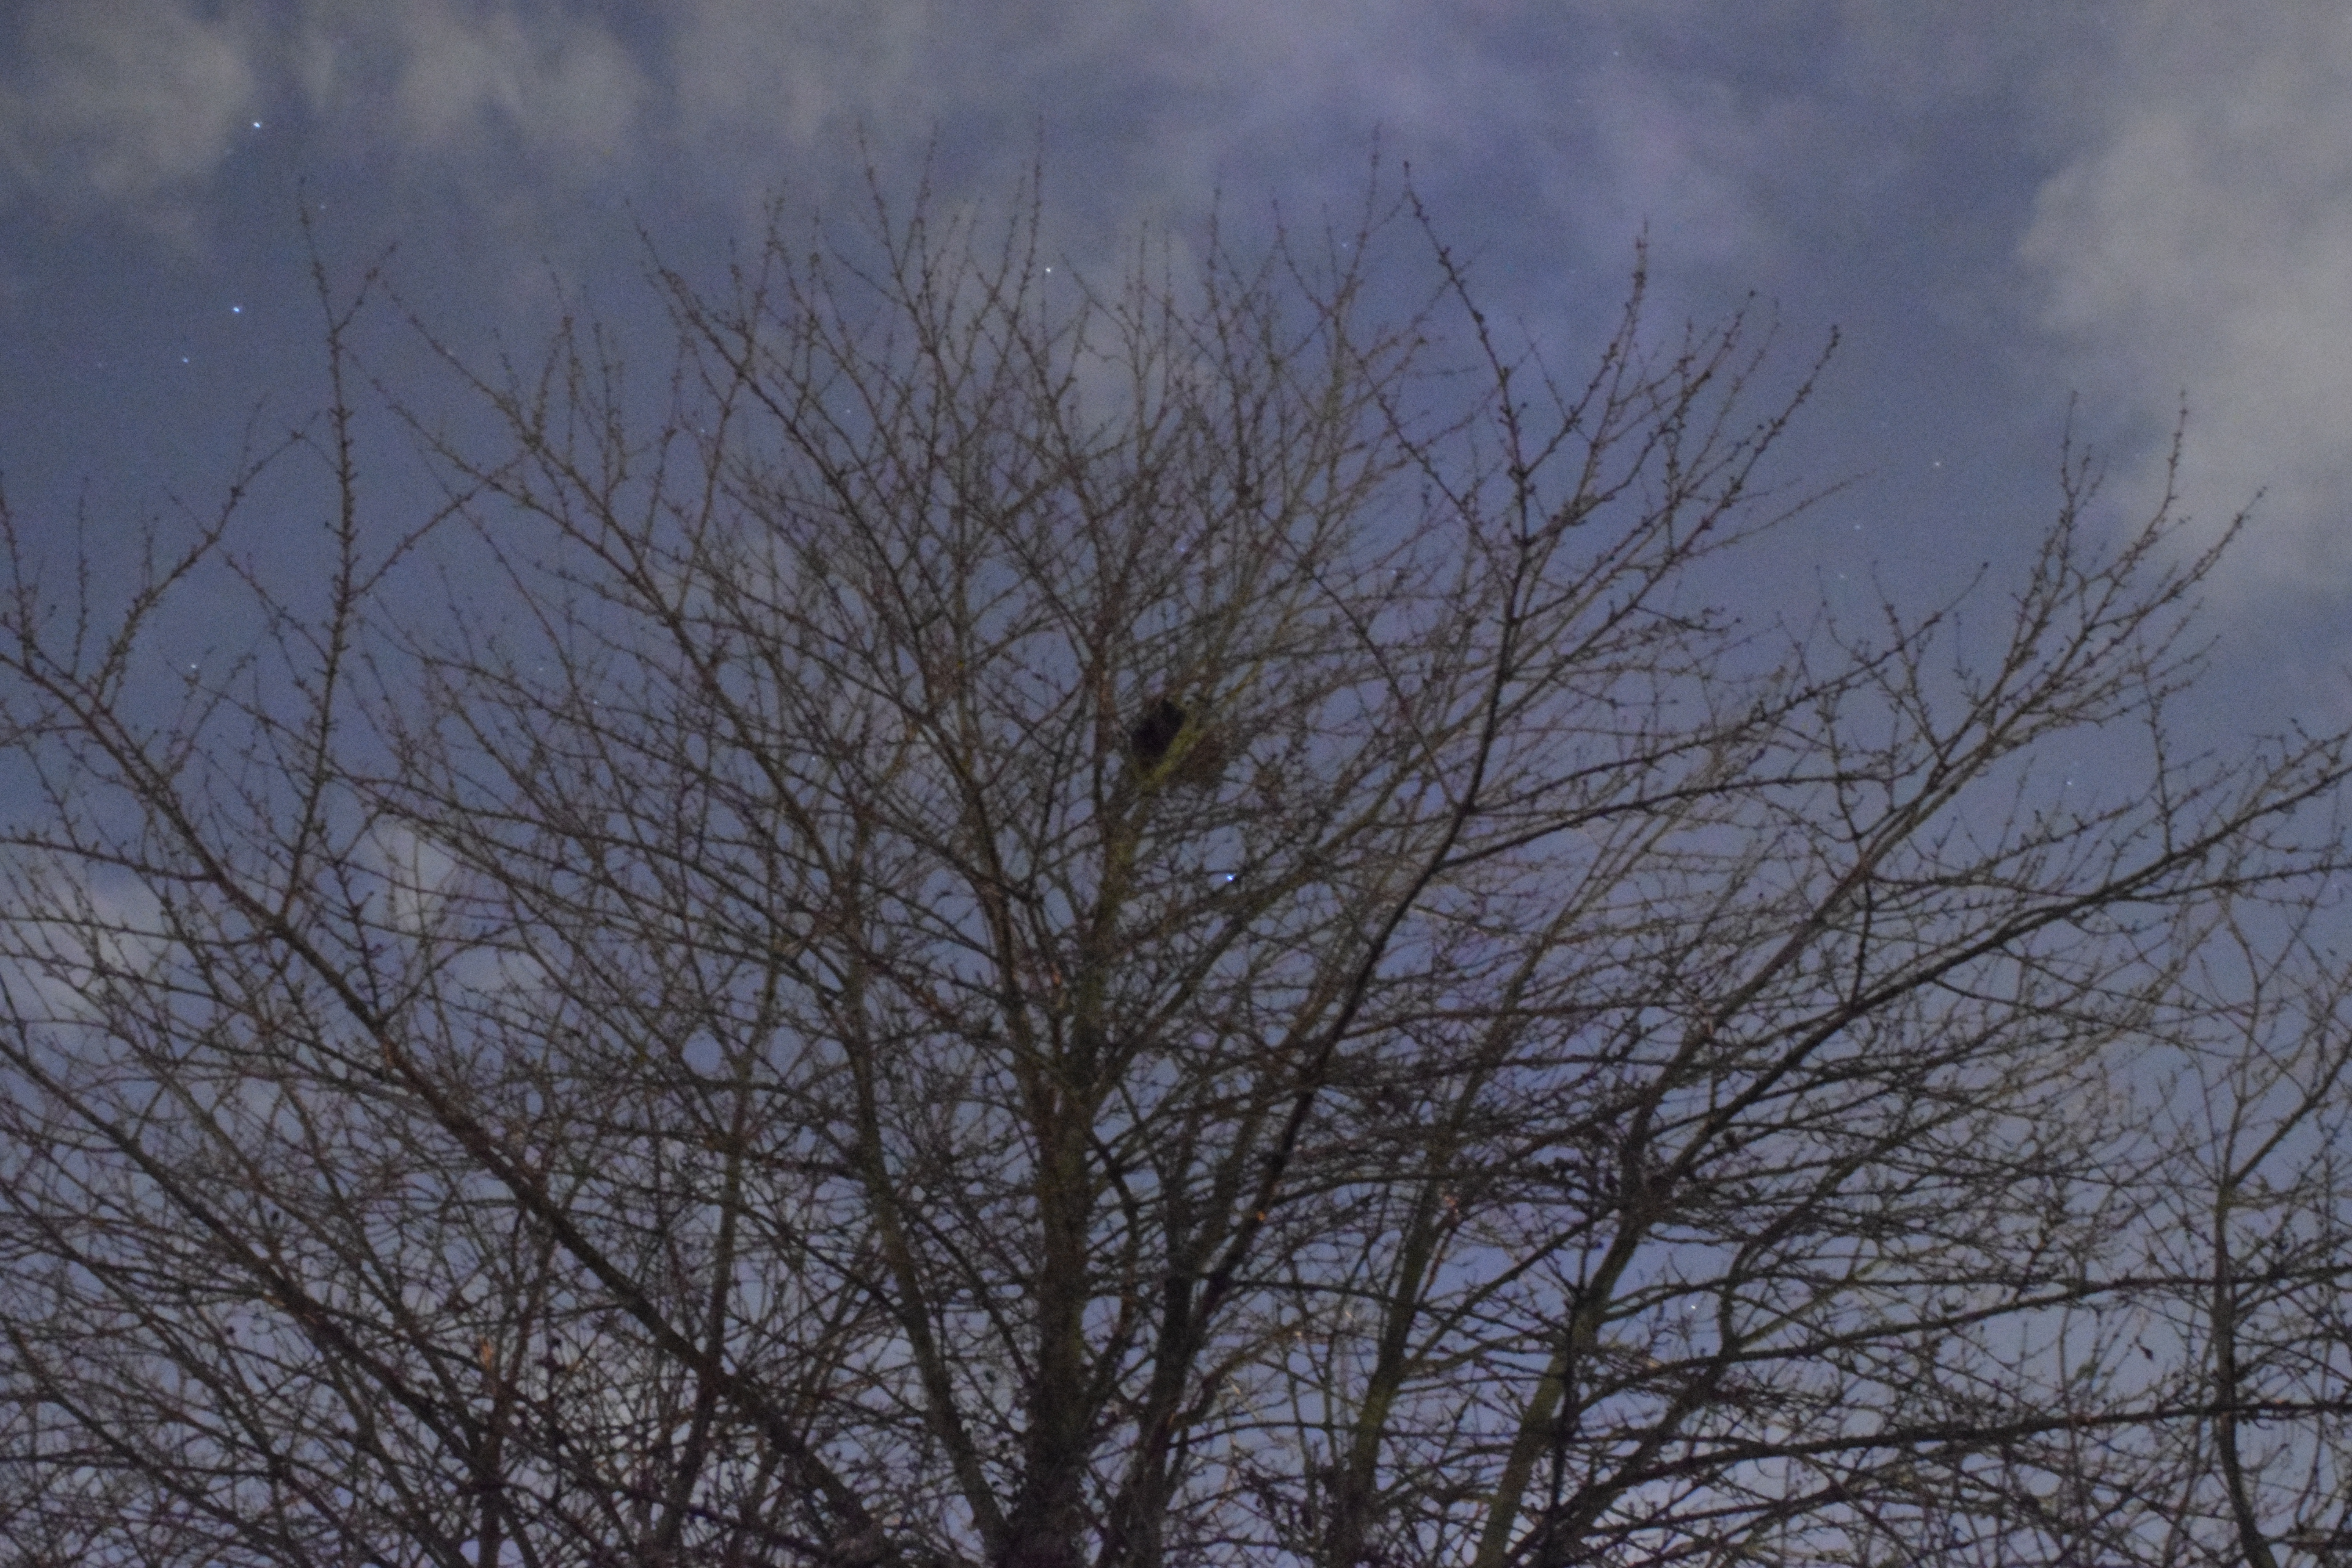 Cambridge Corrie Road, cherry tree with nest on the top